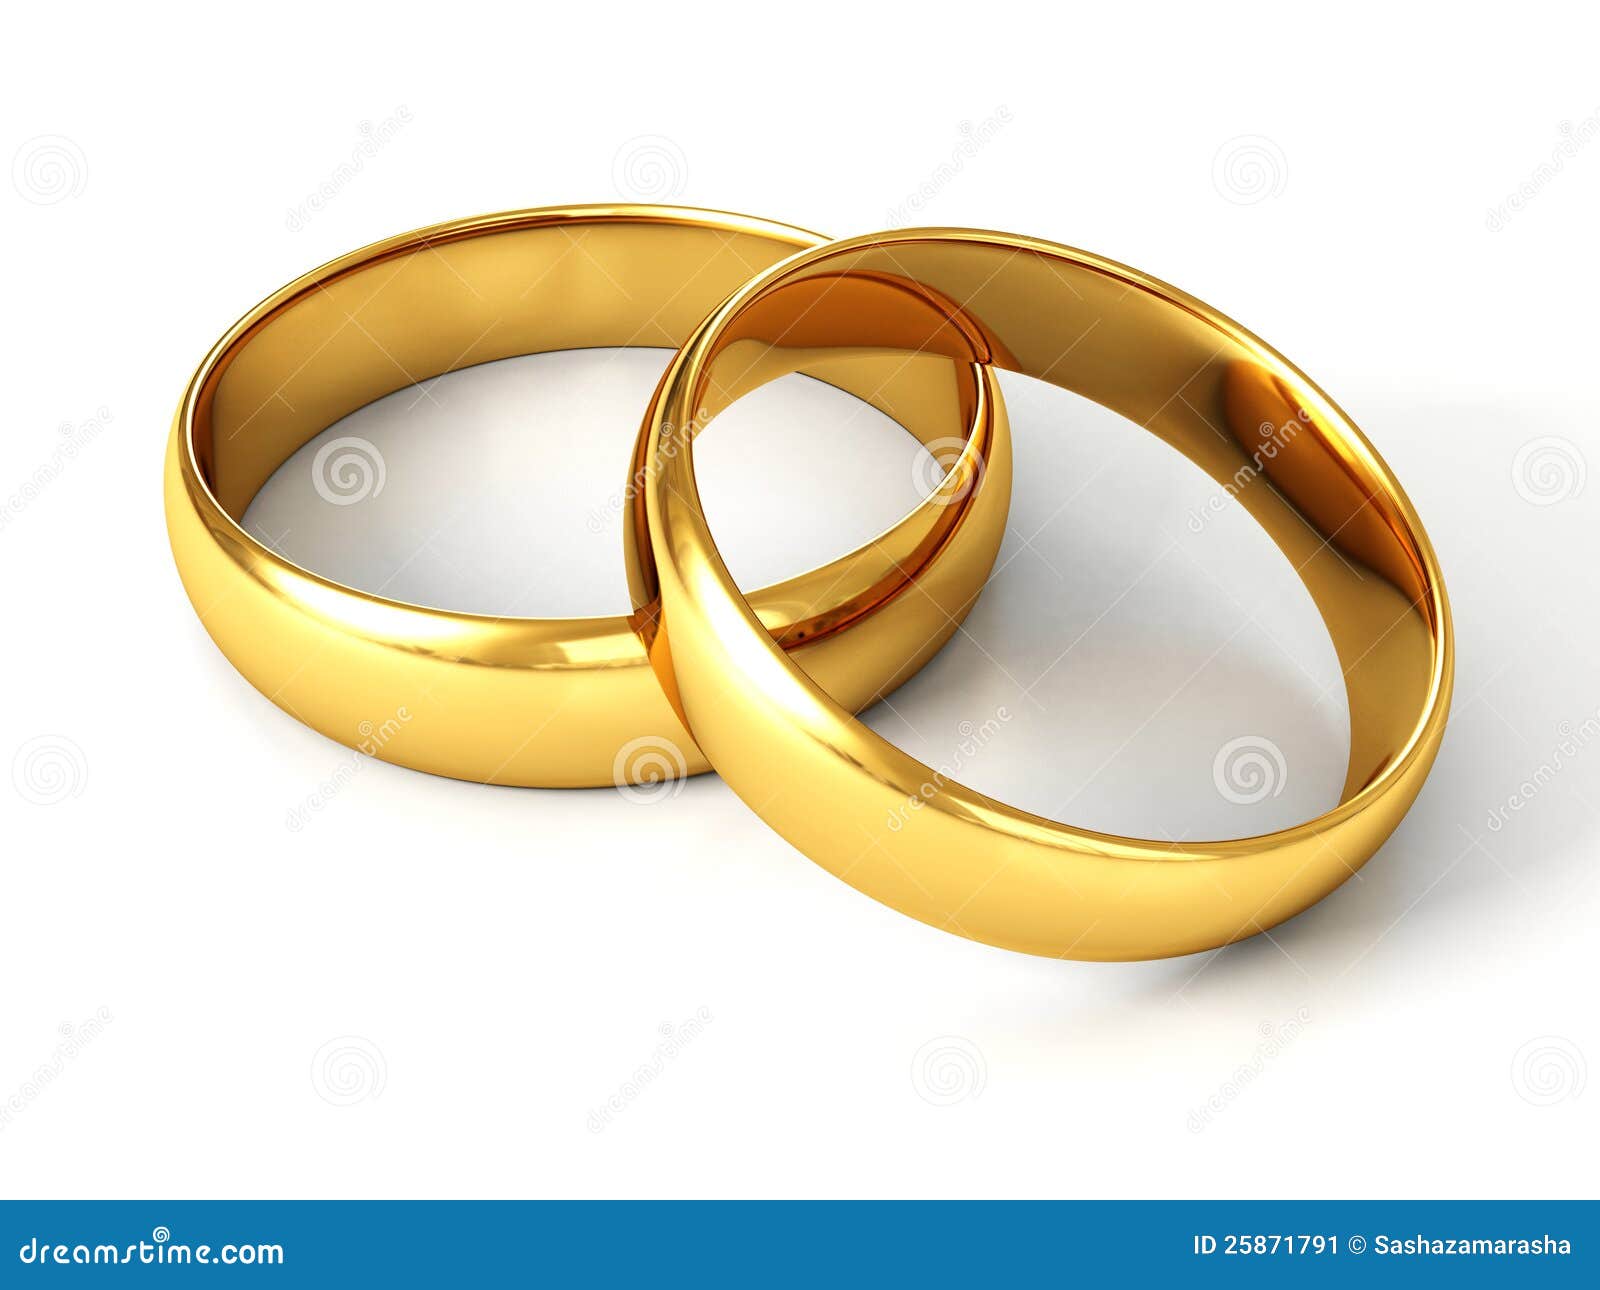 Stock Image: Couple of gold wedding rings on white background